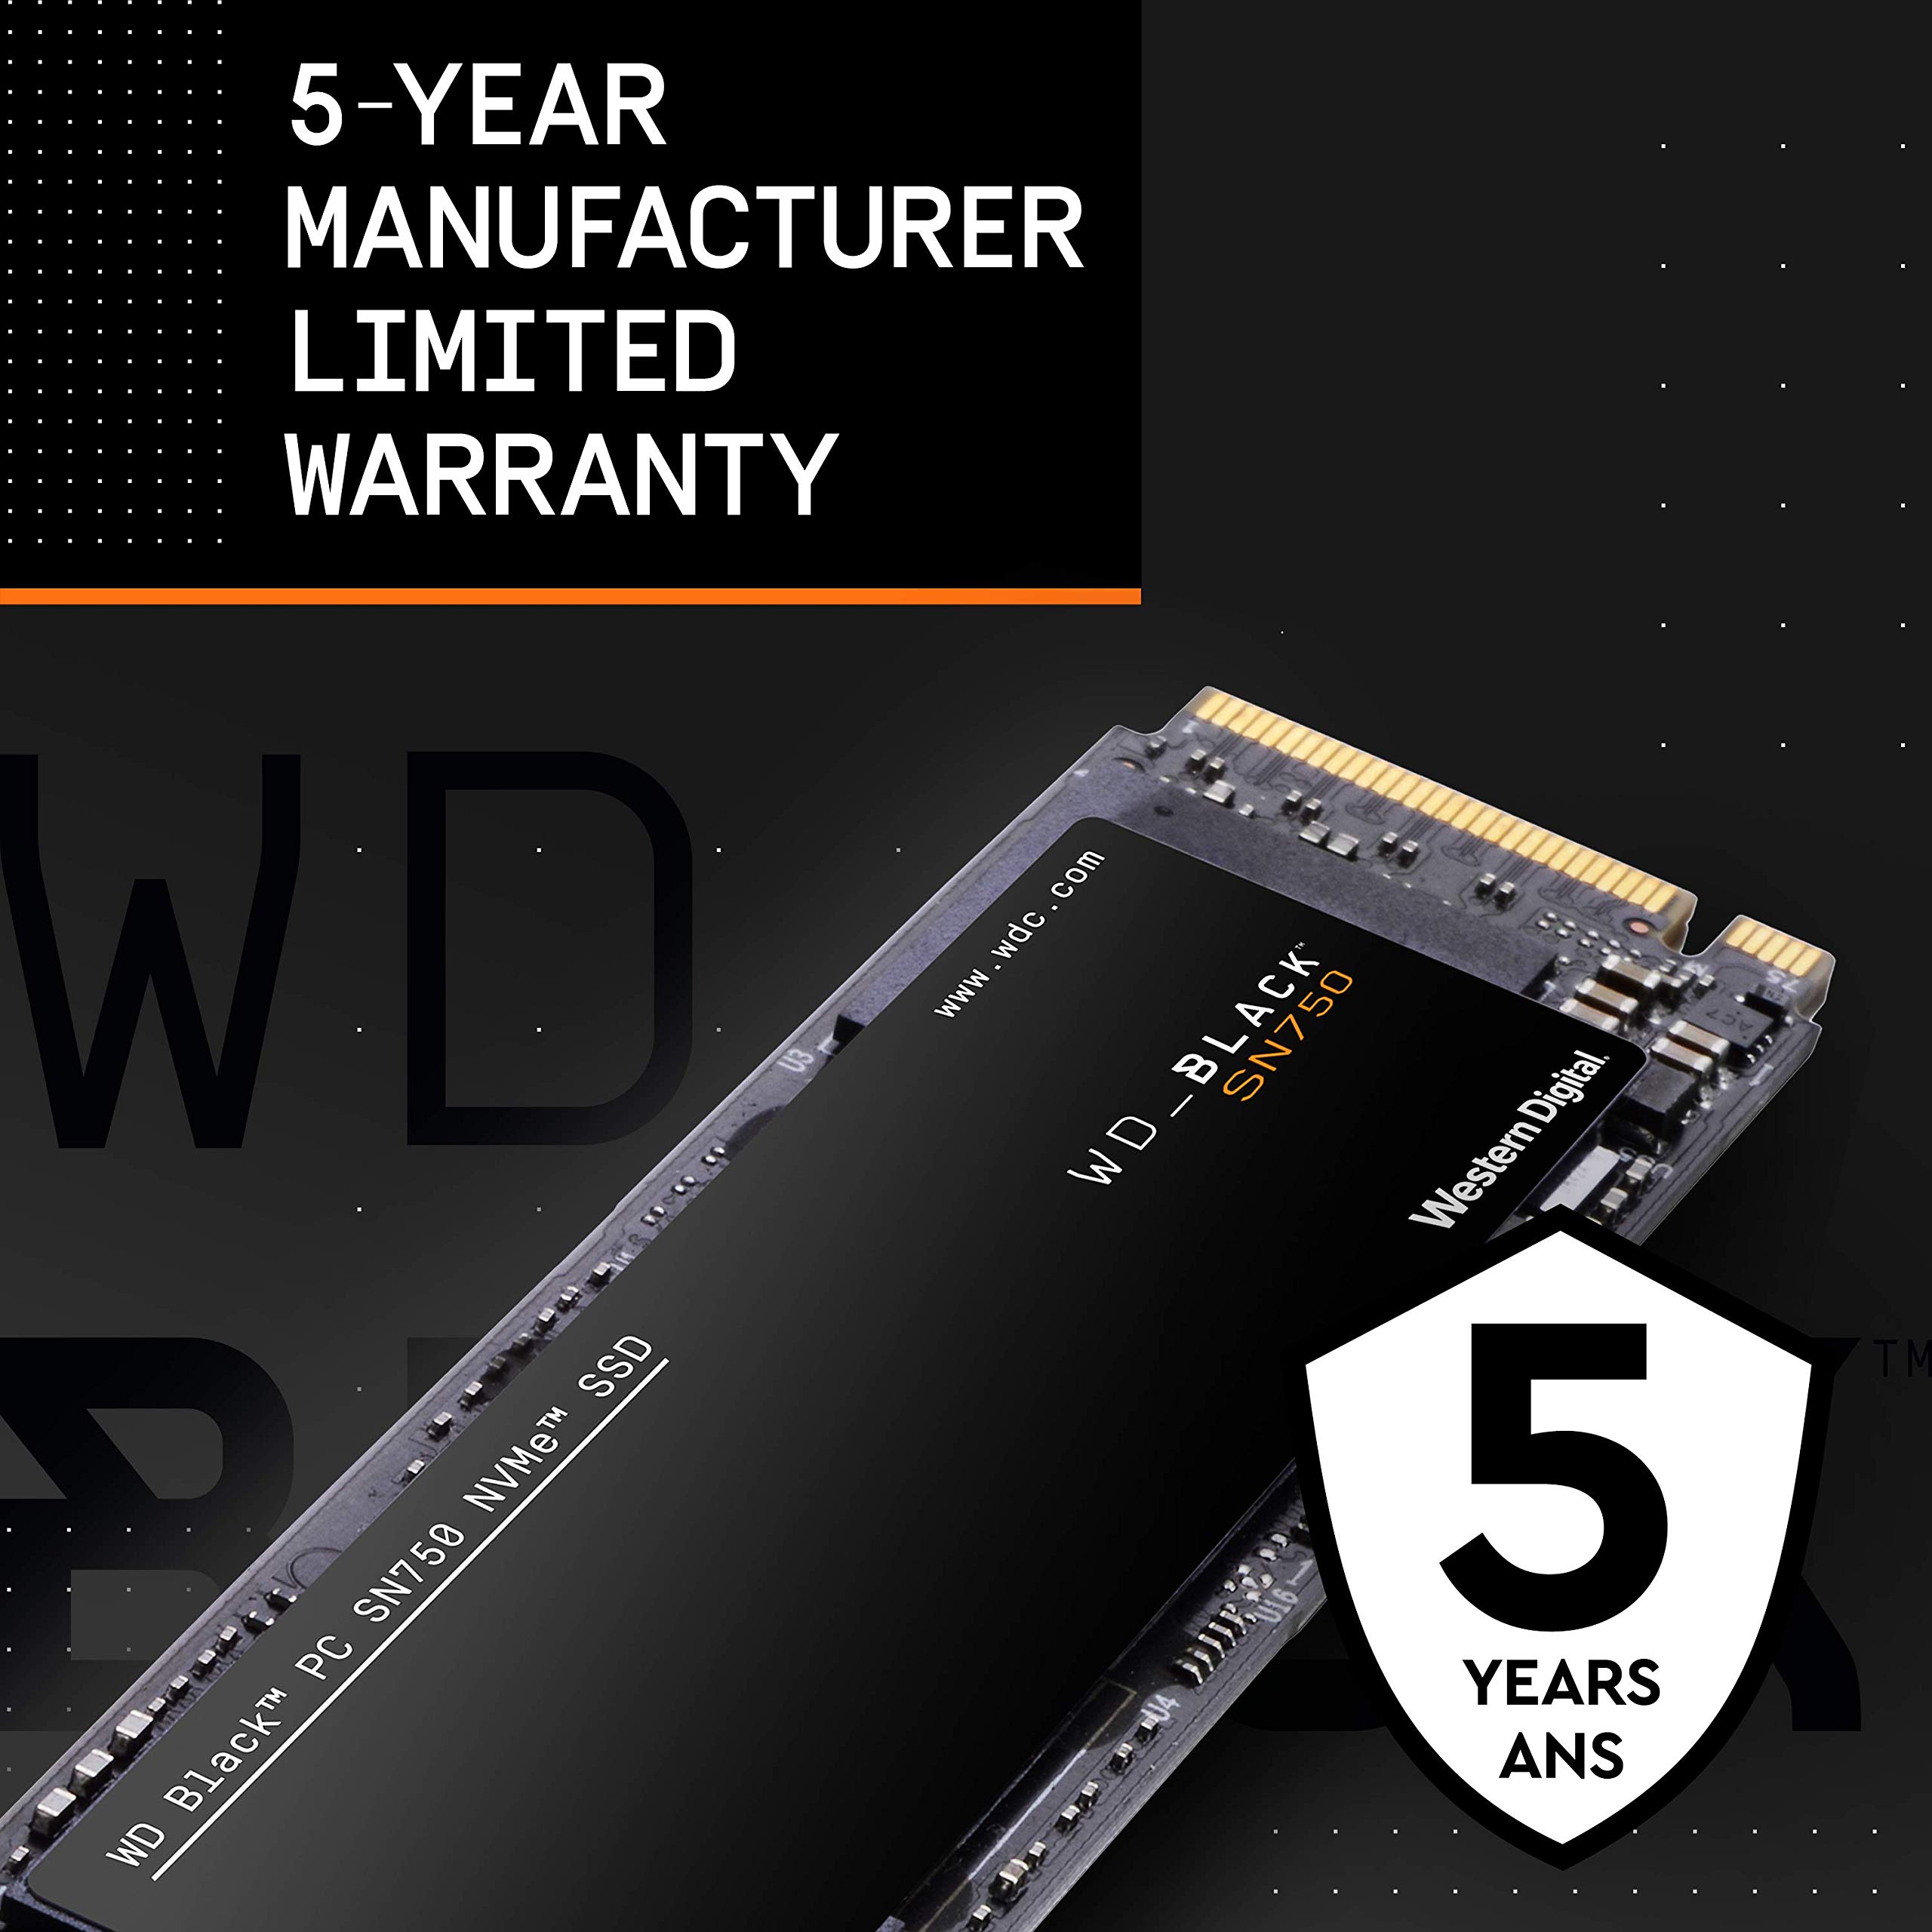 WD_BLACK 500GB SN750 NVMe Internal Gaming SSD Solid State Drive - Gen3 PCIe, M.2 2280, 3D NAND, Up to 3,430 MB/s - WDS500G3X0C